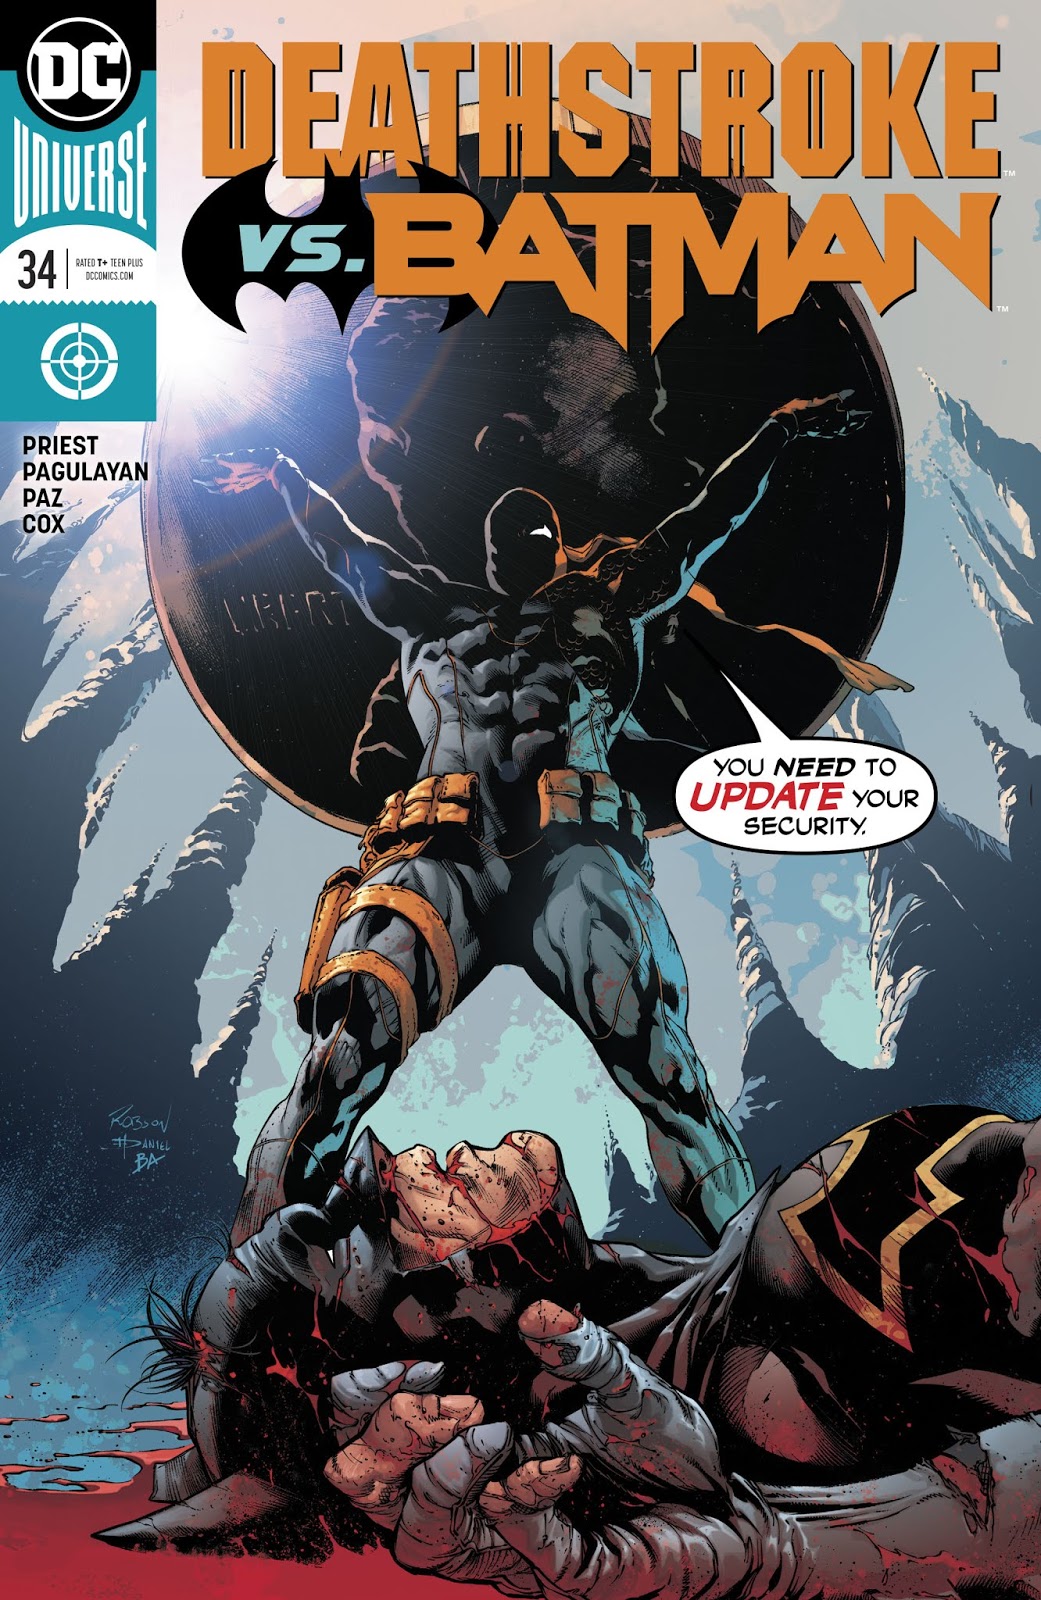 COMIC BOOK FAN AND LOVER: DEATHSTROKE vs BATMAN, PARTE 5 – DC COMICS